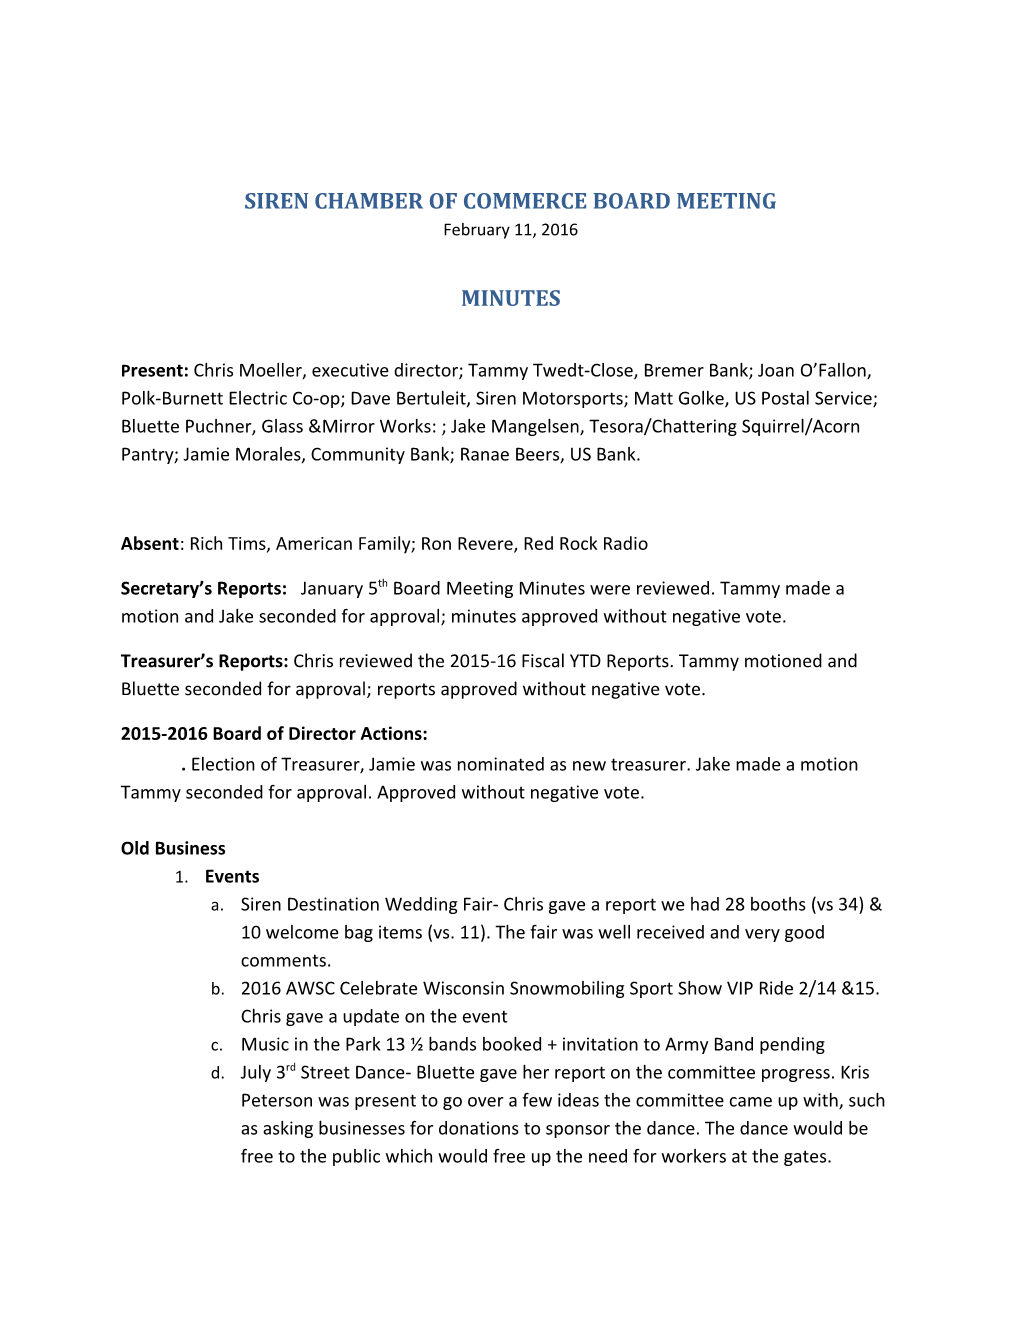 Siren Chamber of Commerce Board Meeting